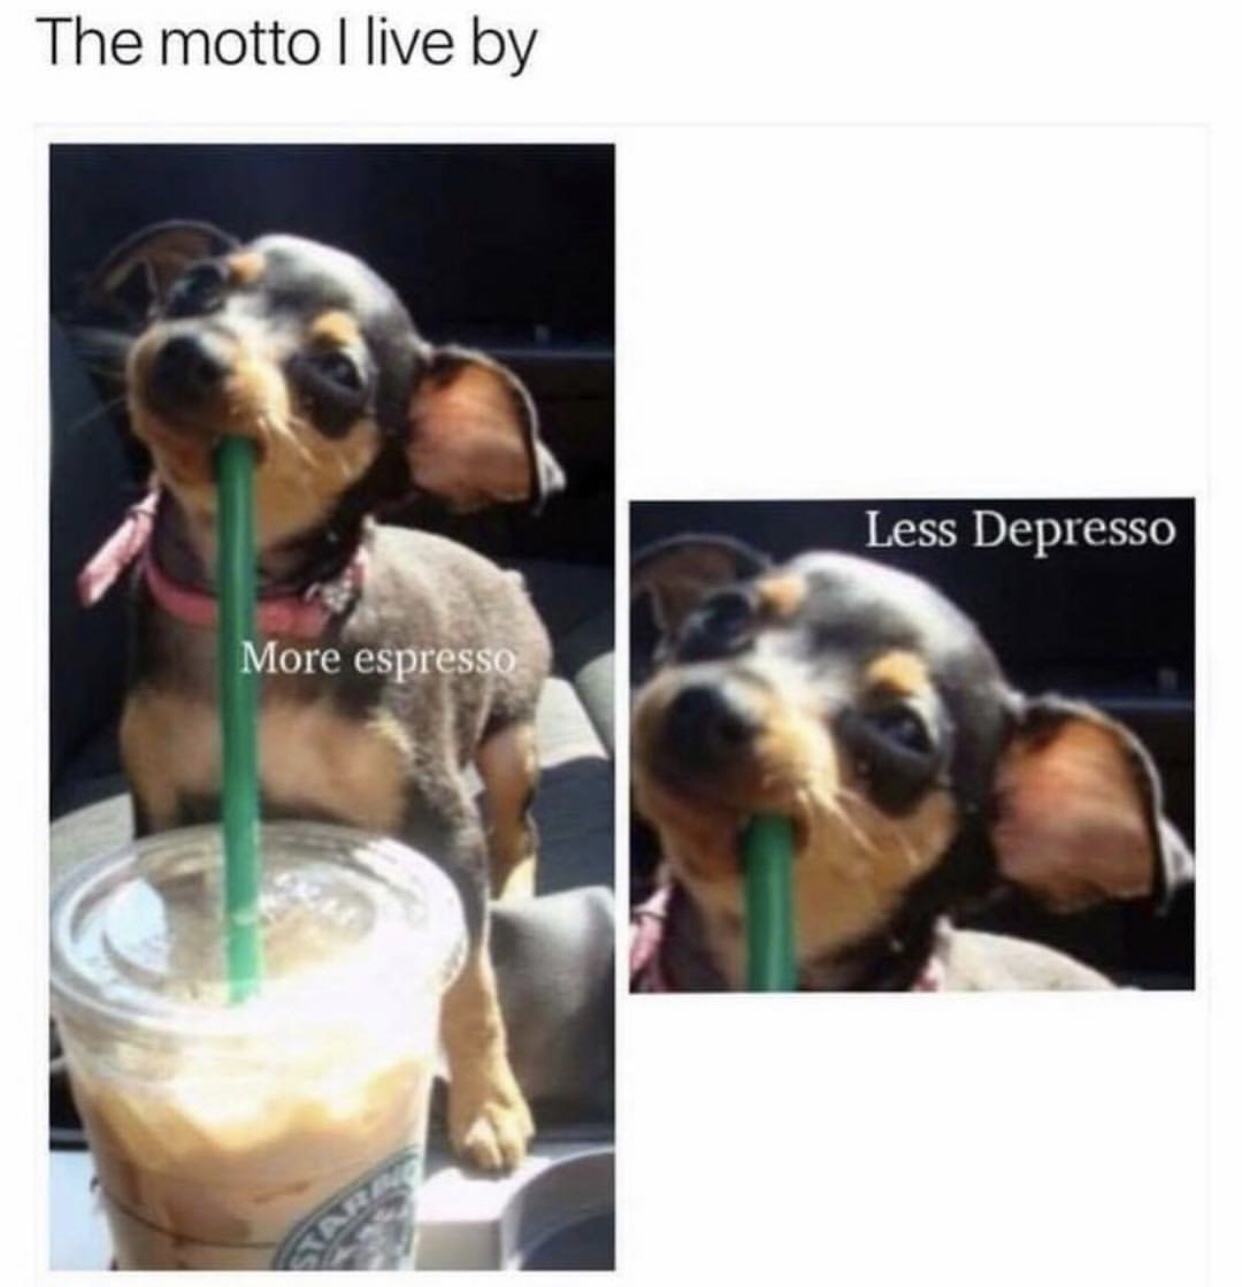 meme more espresso less depresso - The motto I live by Less Depresso More espresso